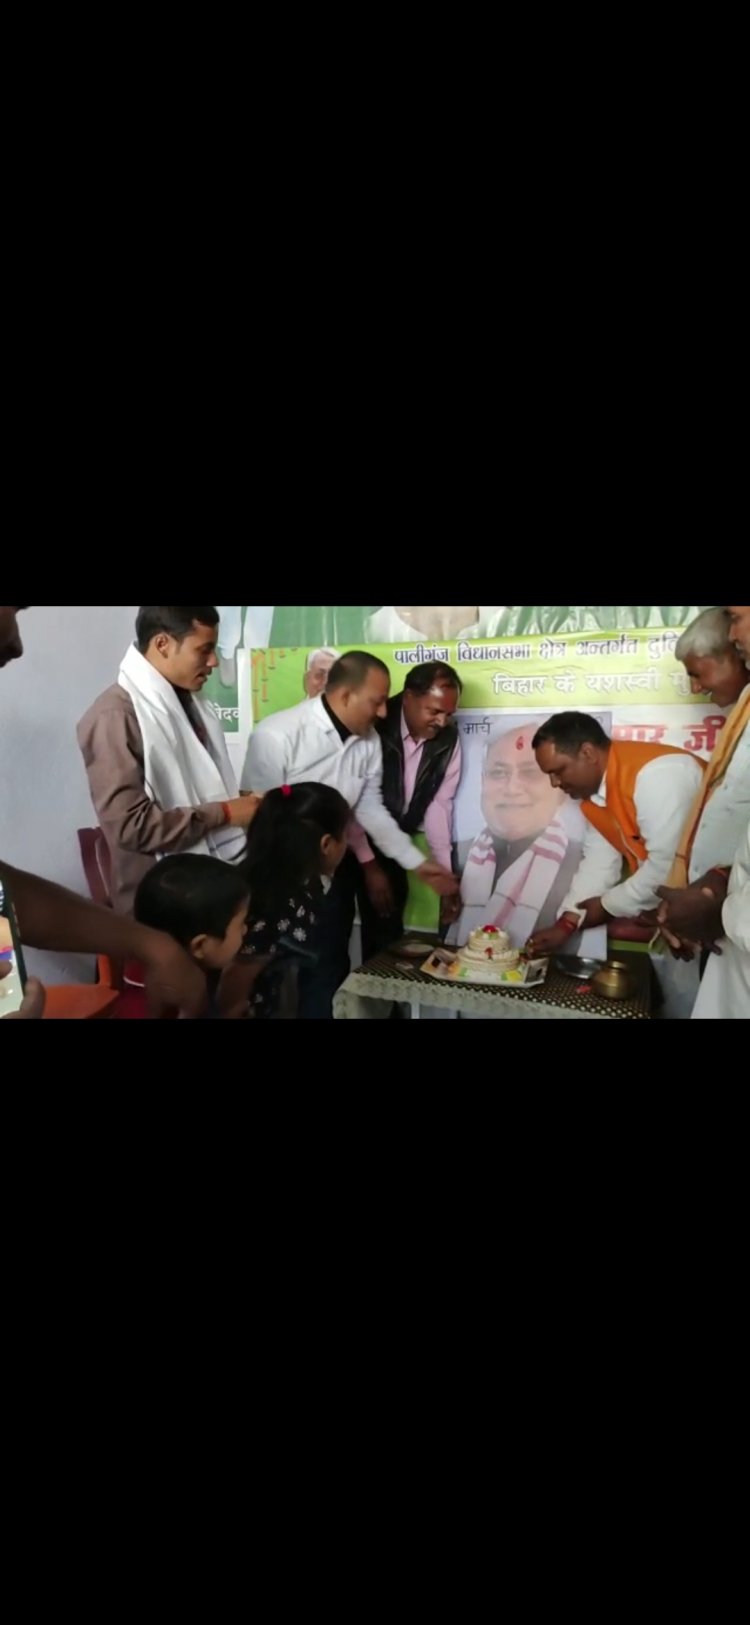 71st birthday of Bihar chief Minister Nitish Kumar's has been celebrated